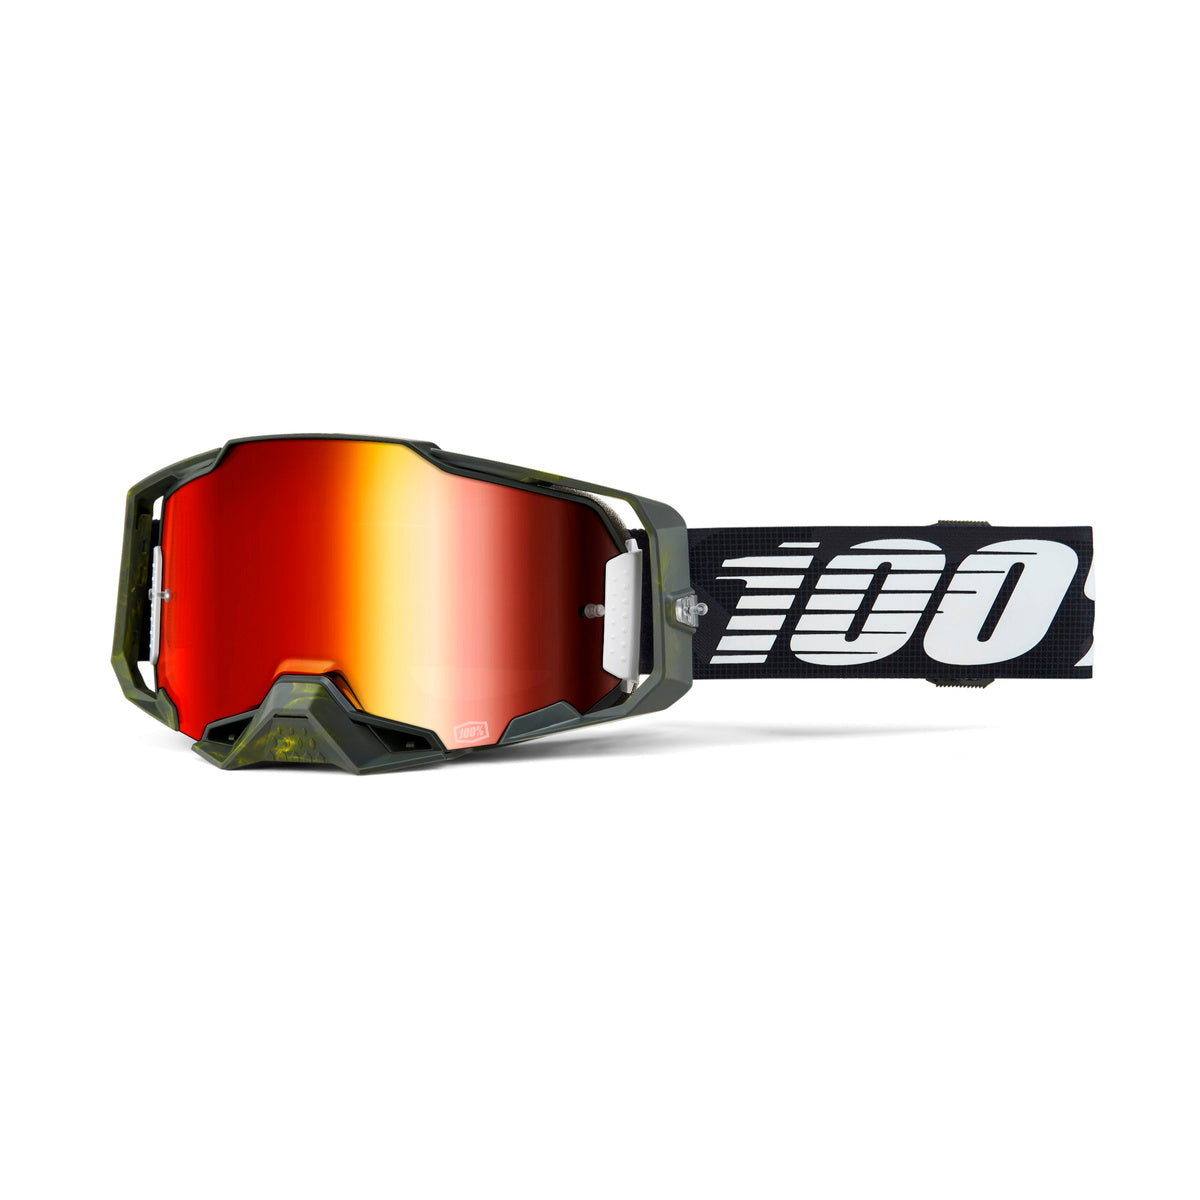 100 Percent Armega Goggles - One Size Fits Most - Soledad - Mirror Red Lens